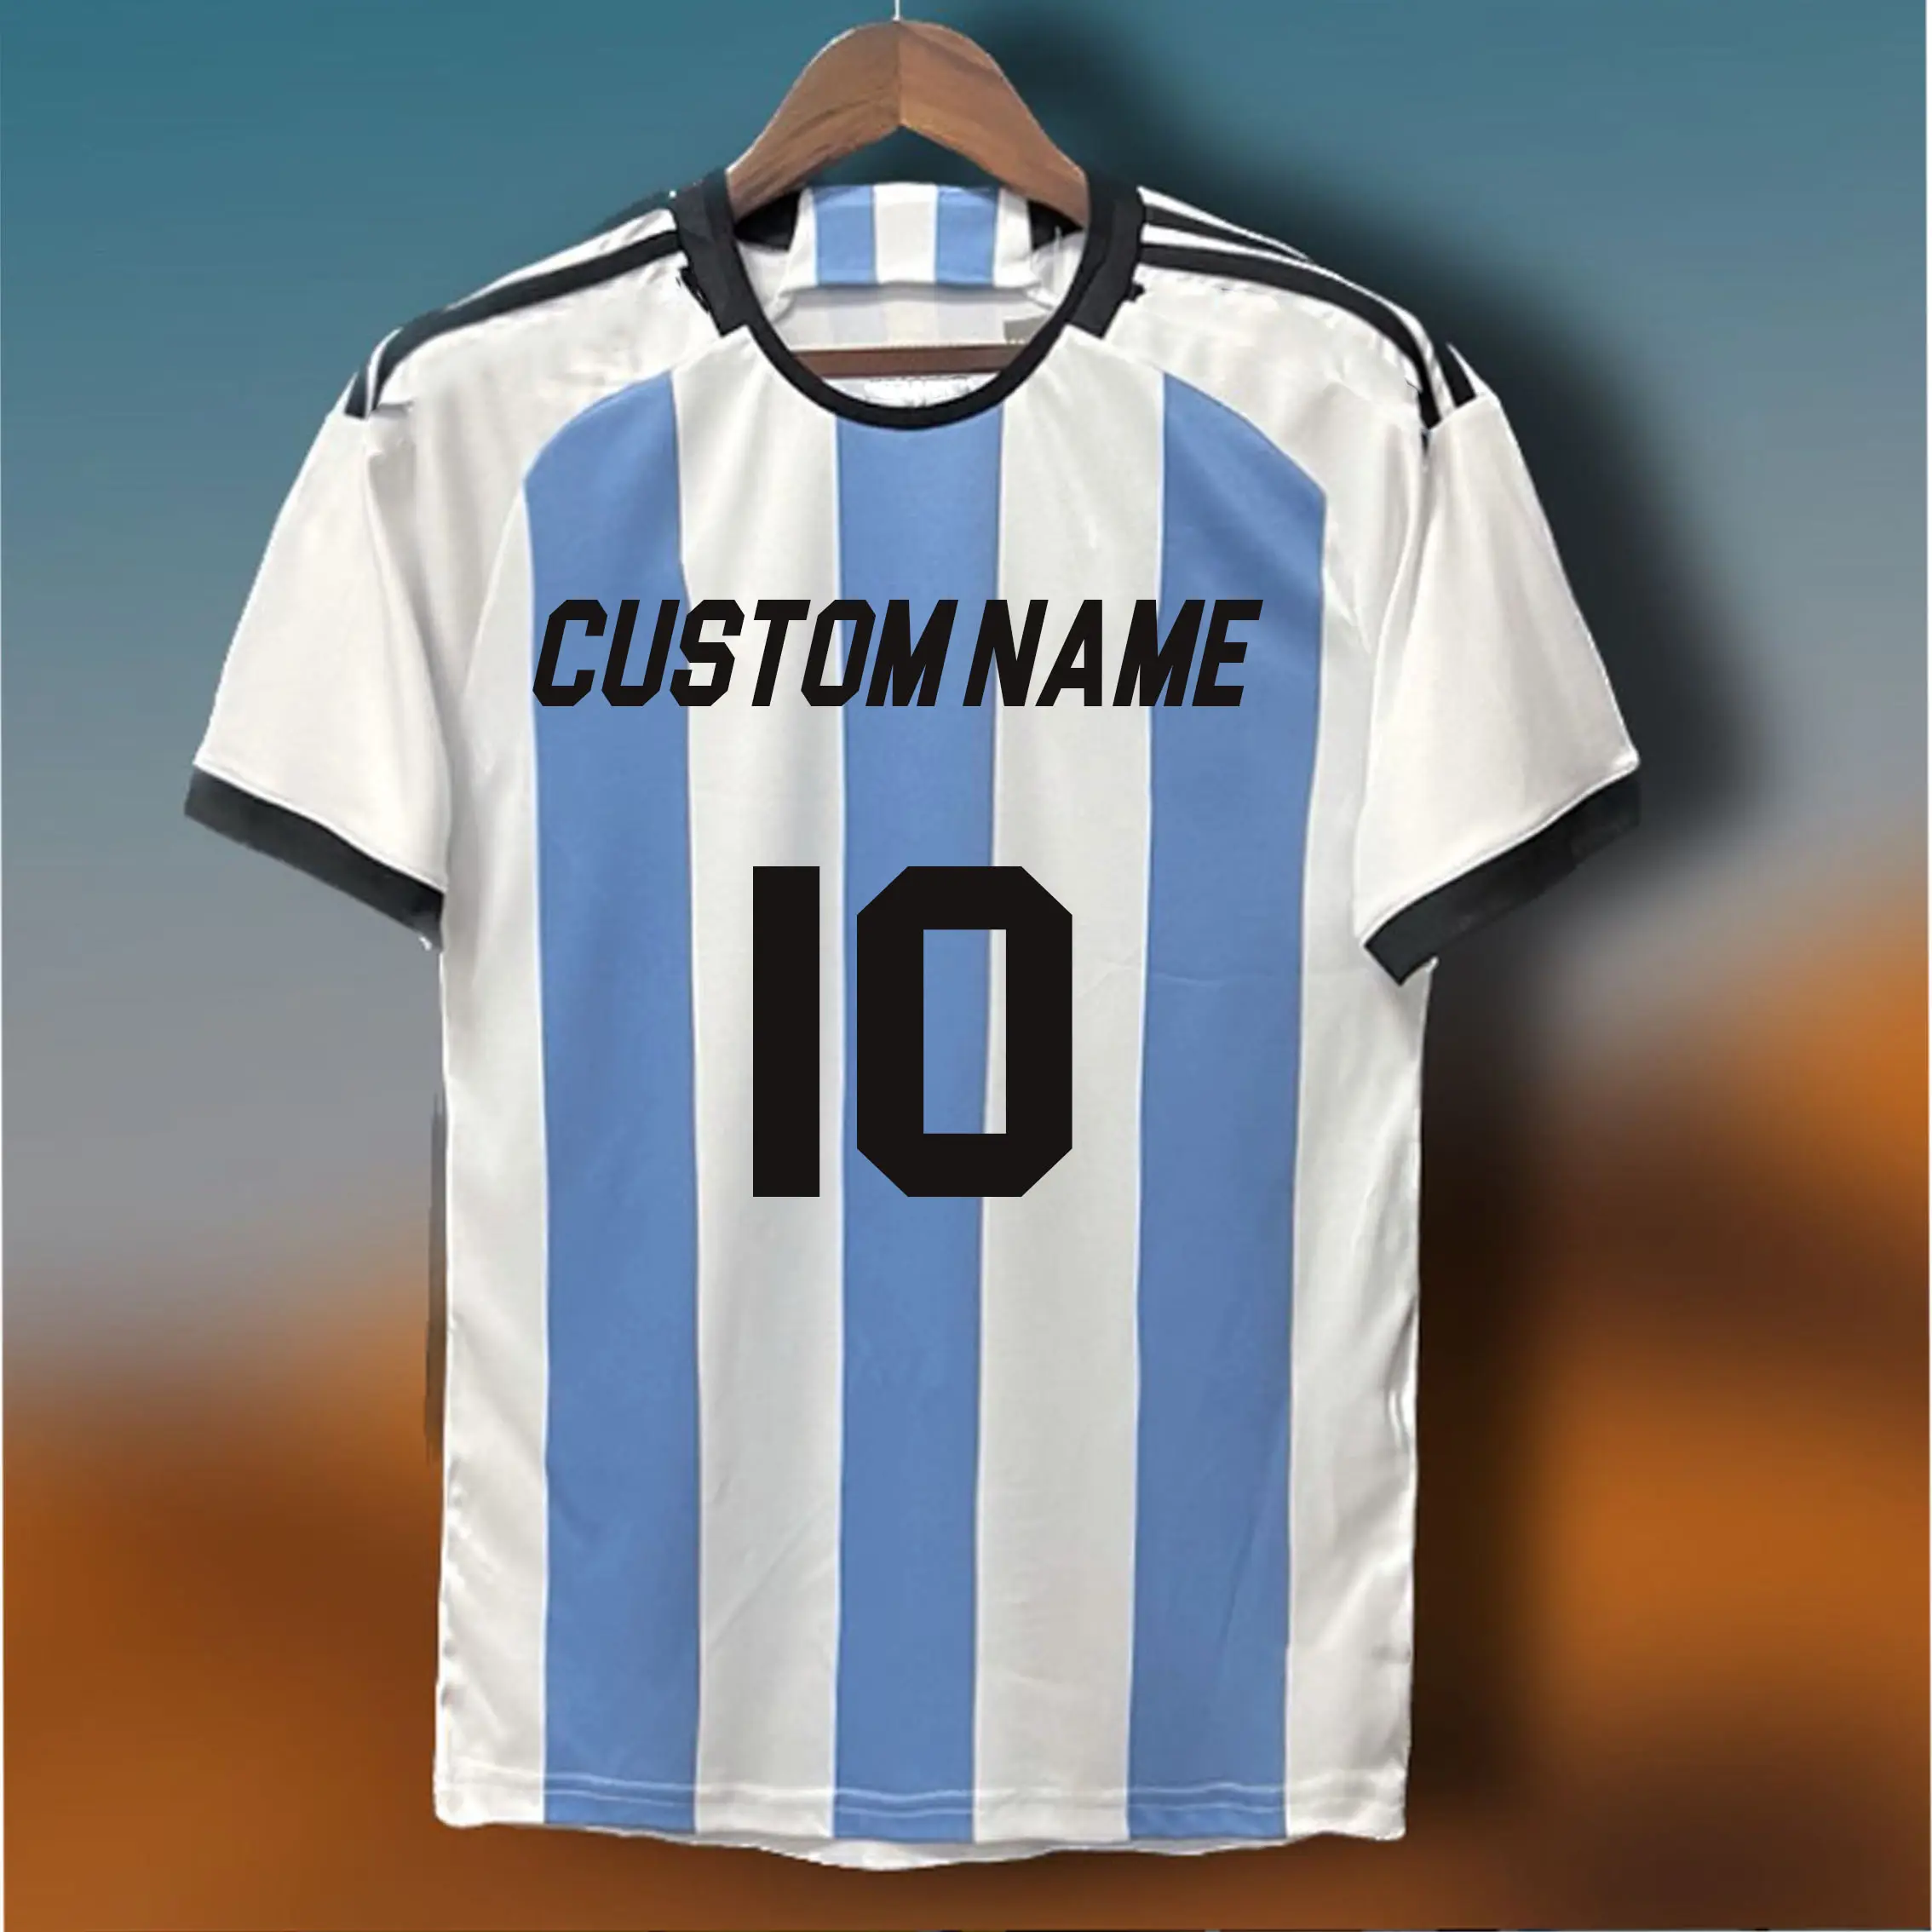 Özelleştirilmiş futbol takımı aşınma süblimasyon futbol tişörtü üniforma spor futbol forması